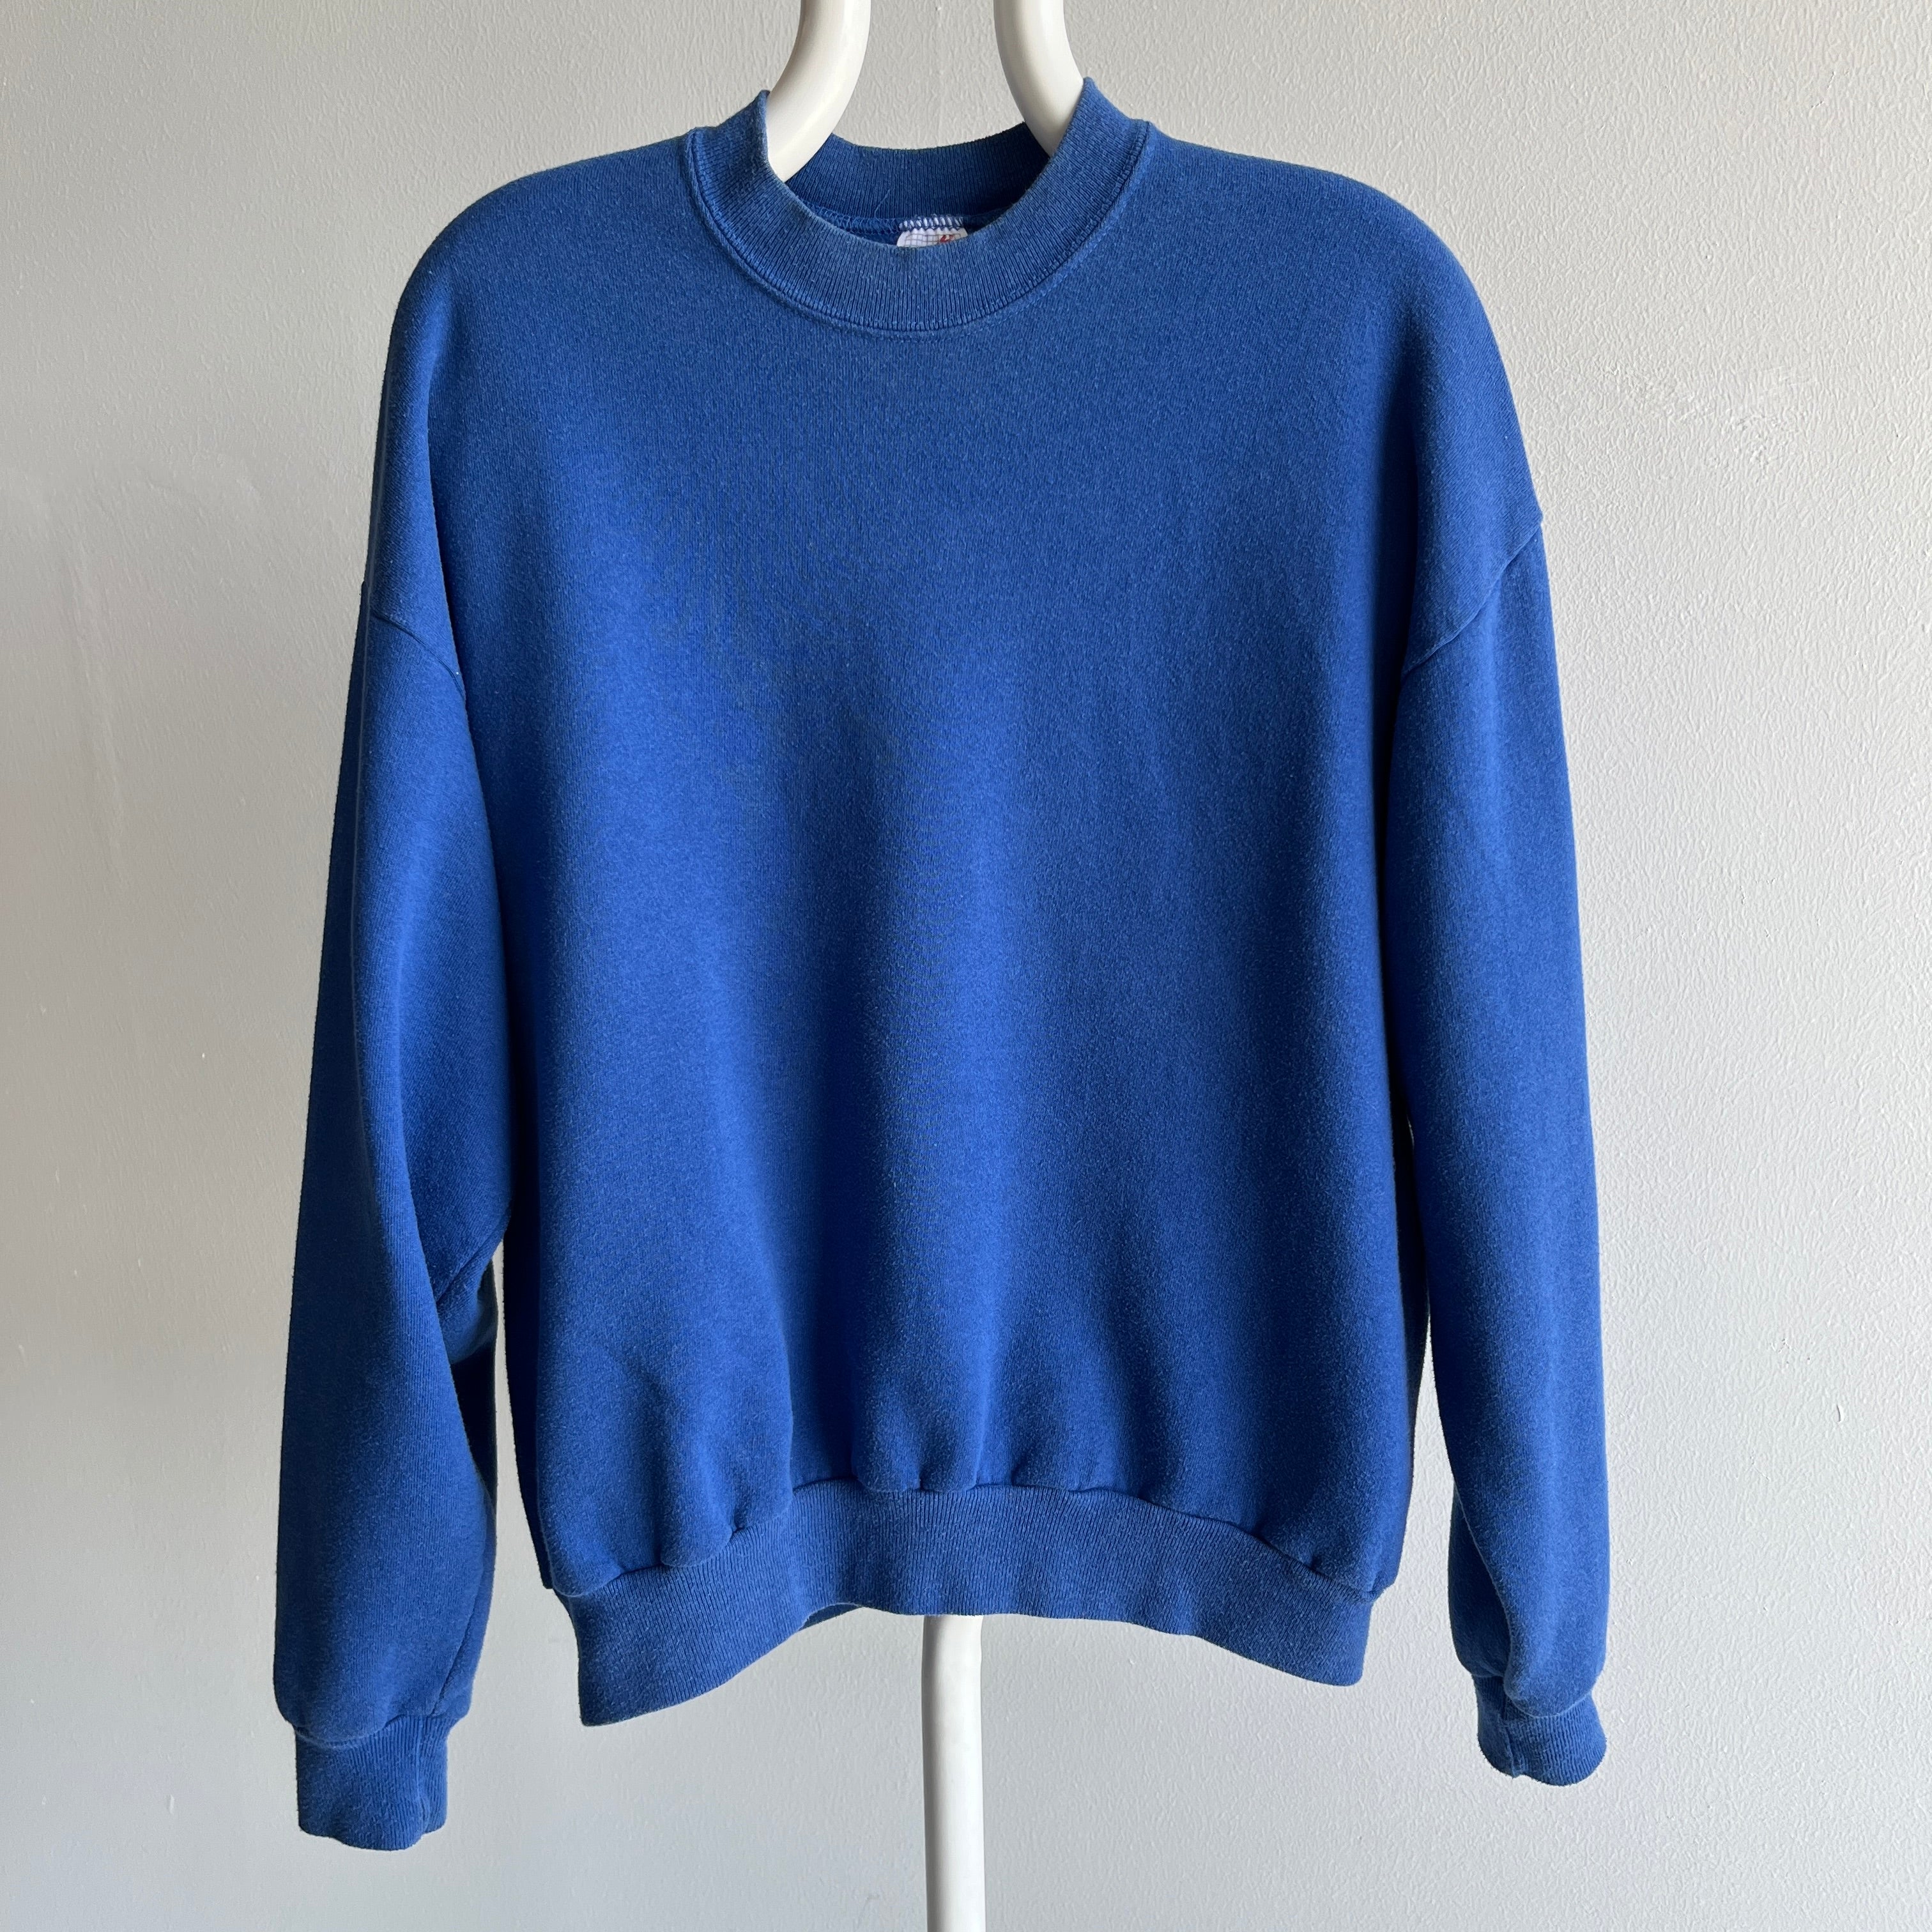 1980s Soft Blank Dodger aka Royal Blue Sweatshirt by Jerzees